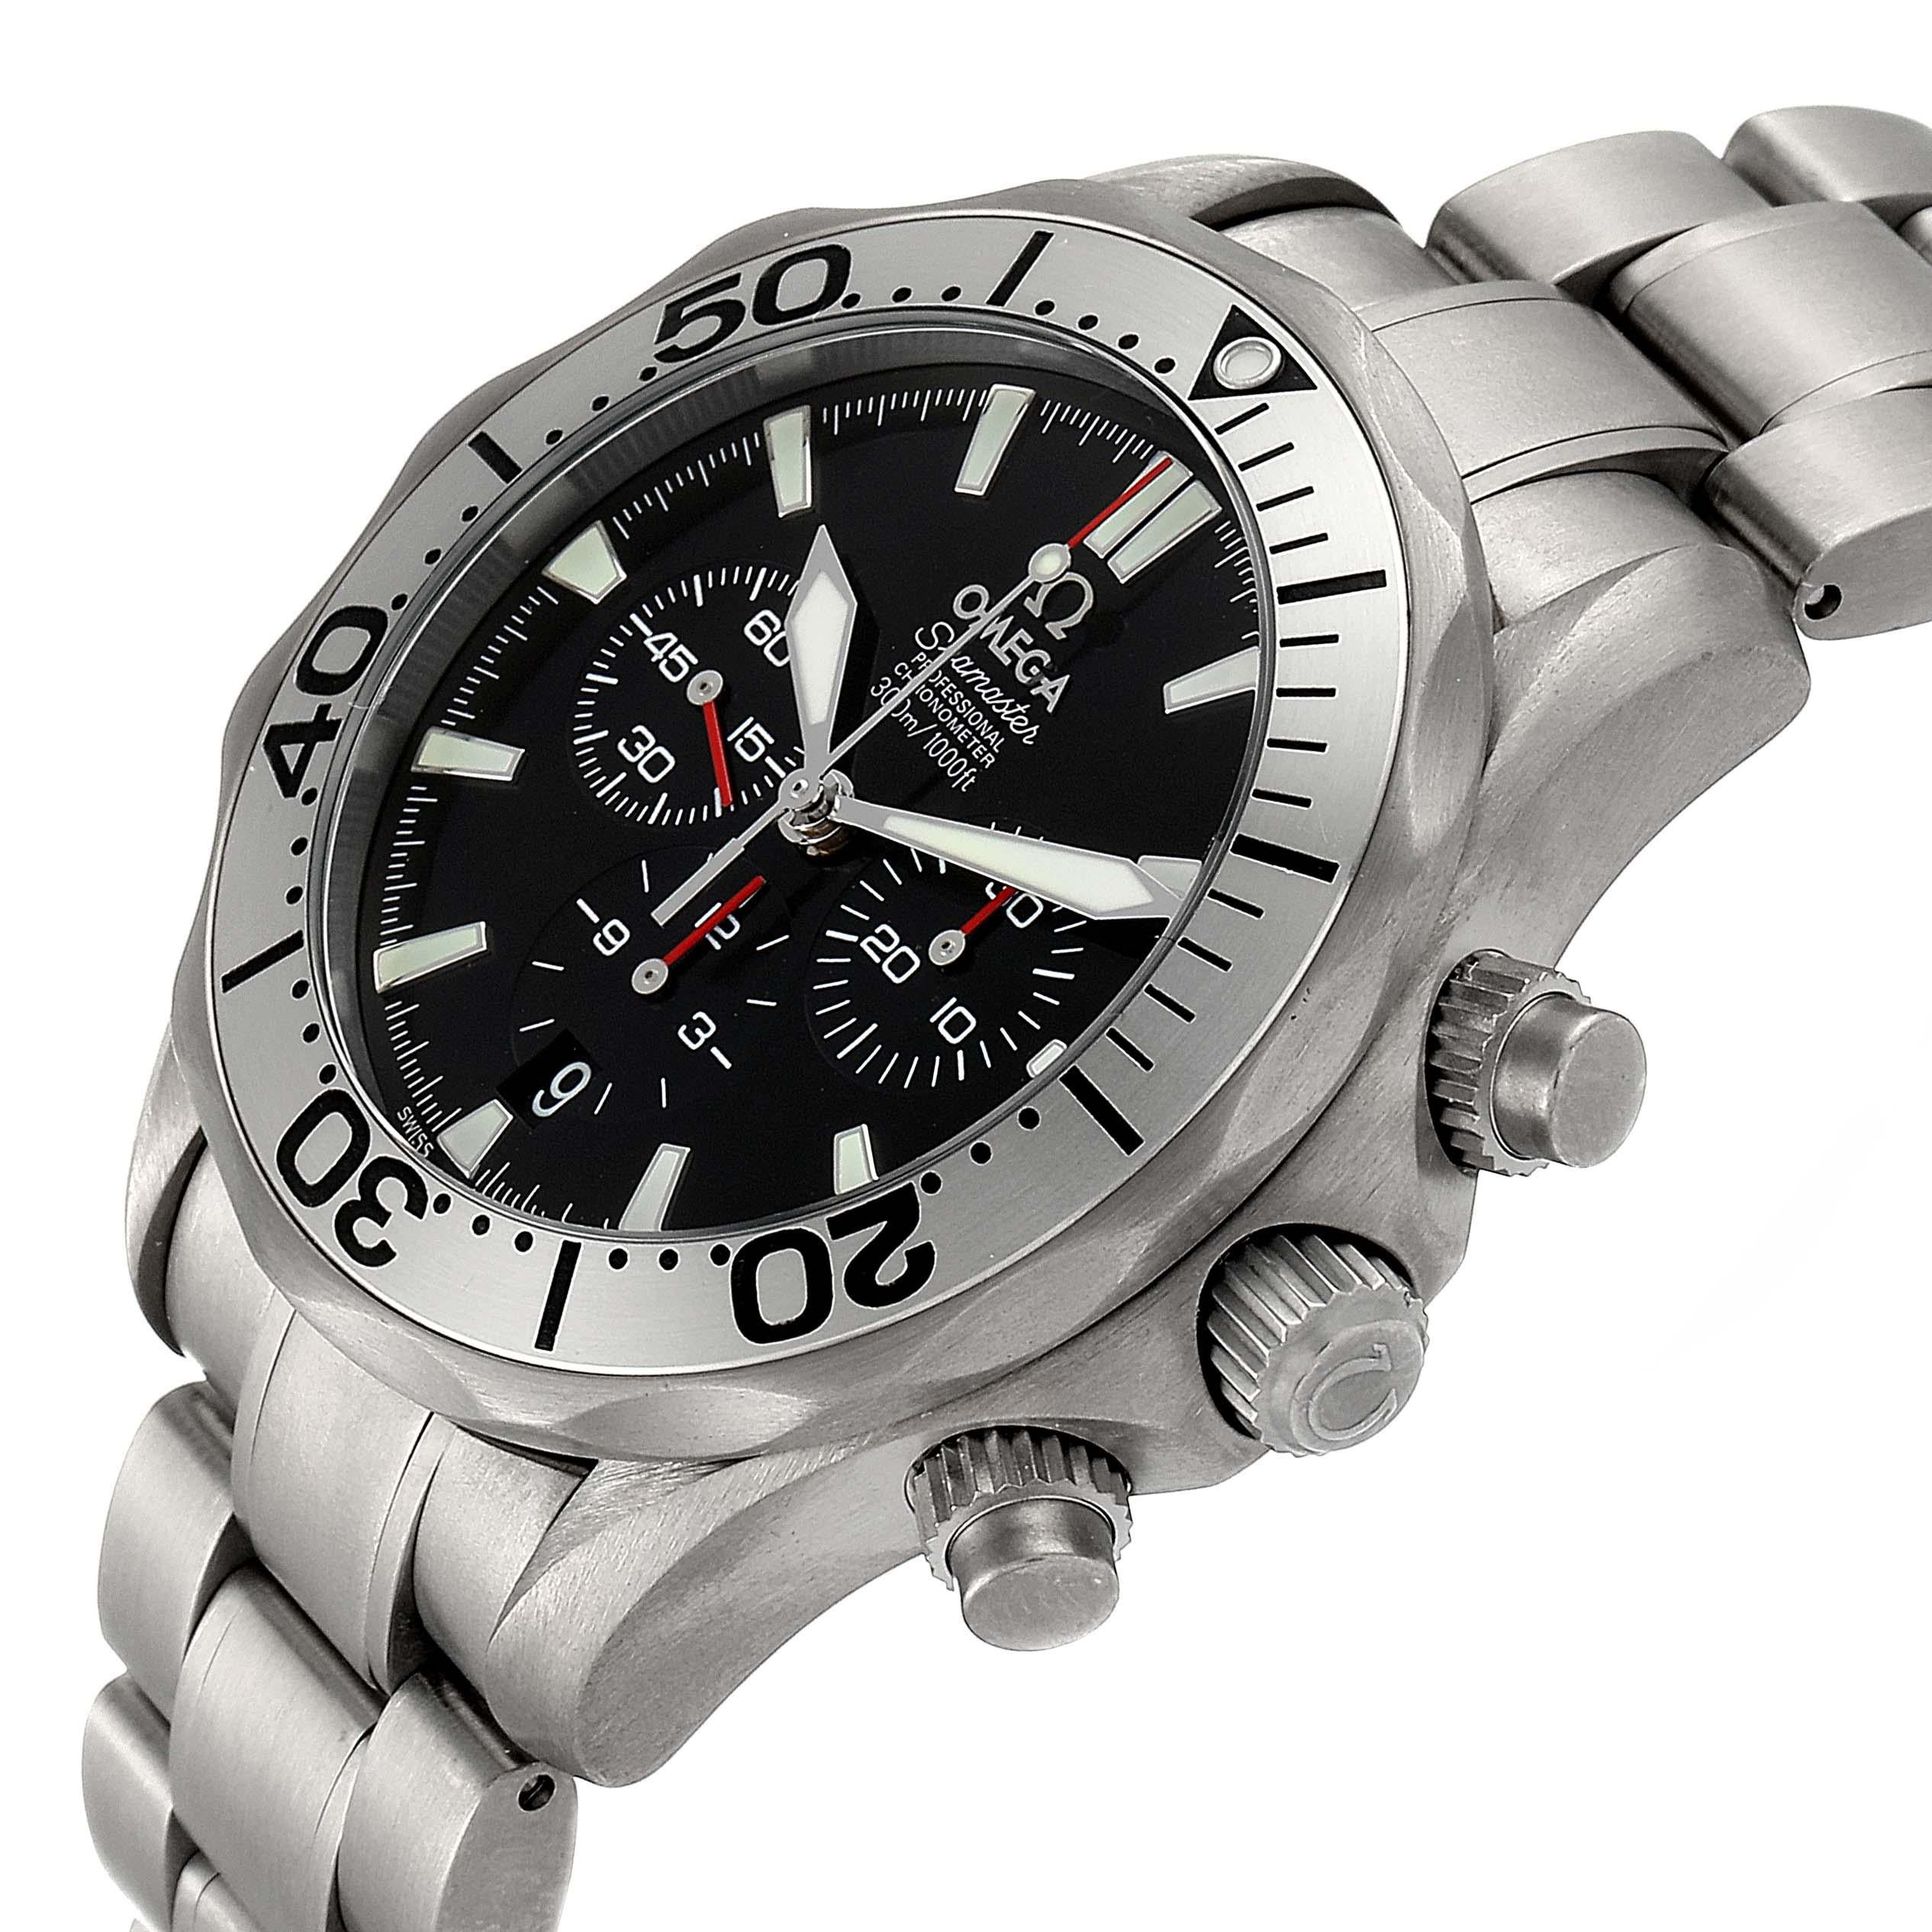 Omega Seamaster Diver Chronograph Titanium Mens Watch 2293.52.00 For Sale 2